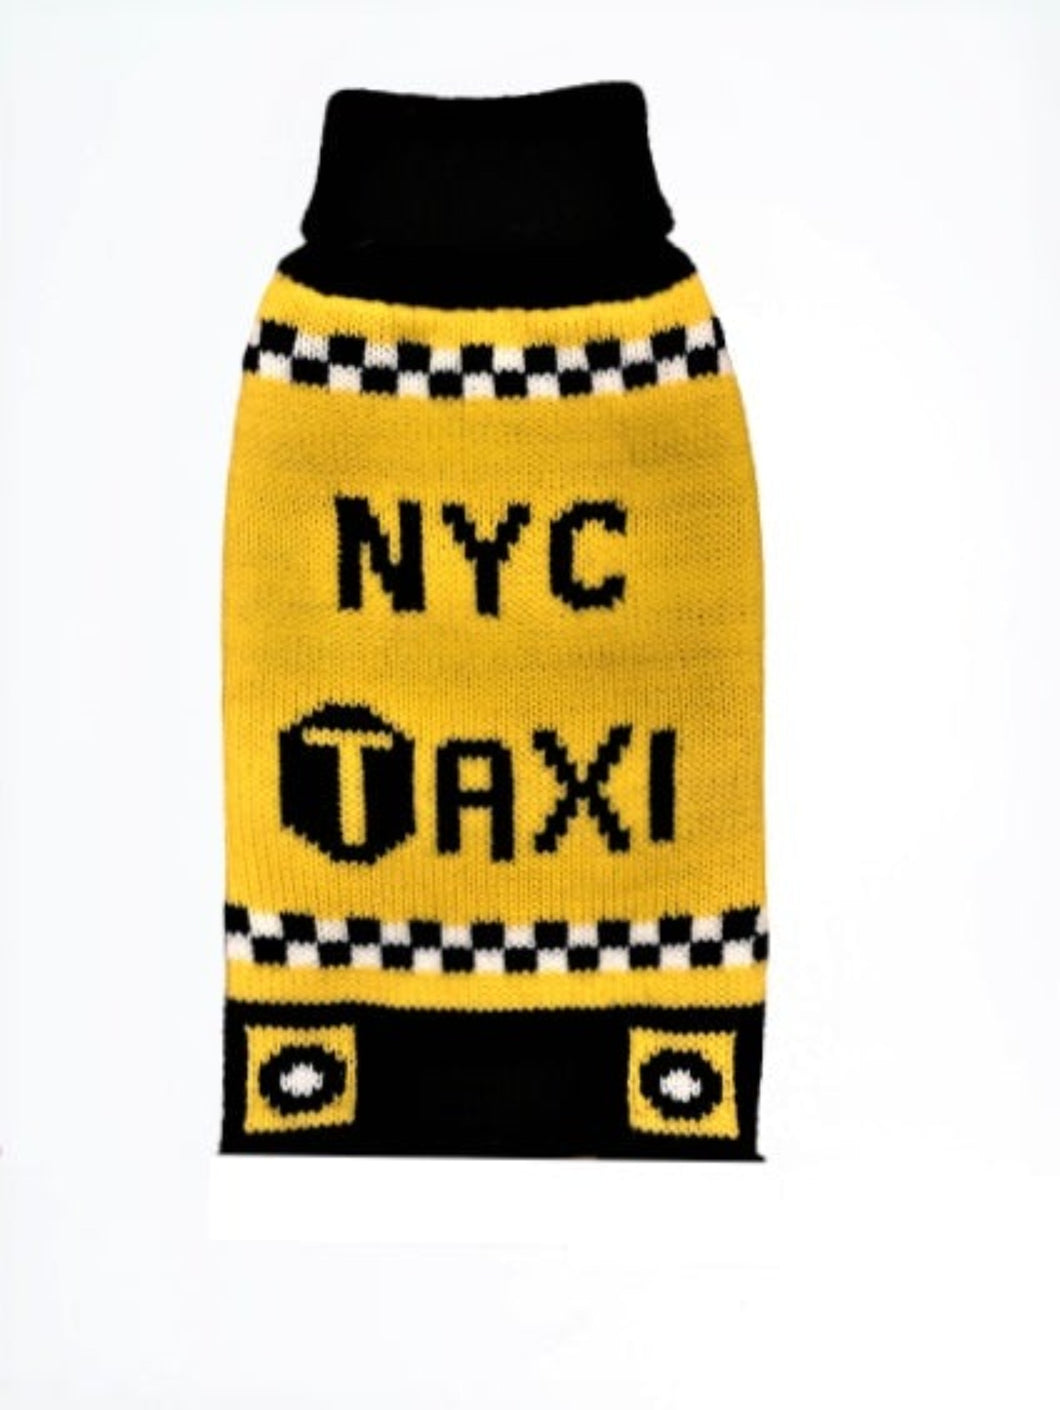 NYC Taxi Dog Sweater